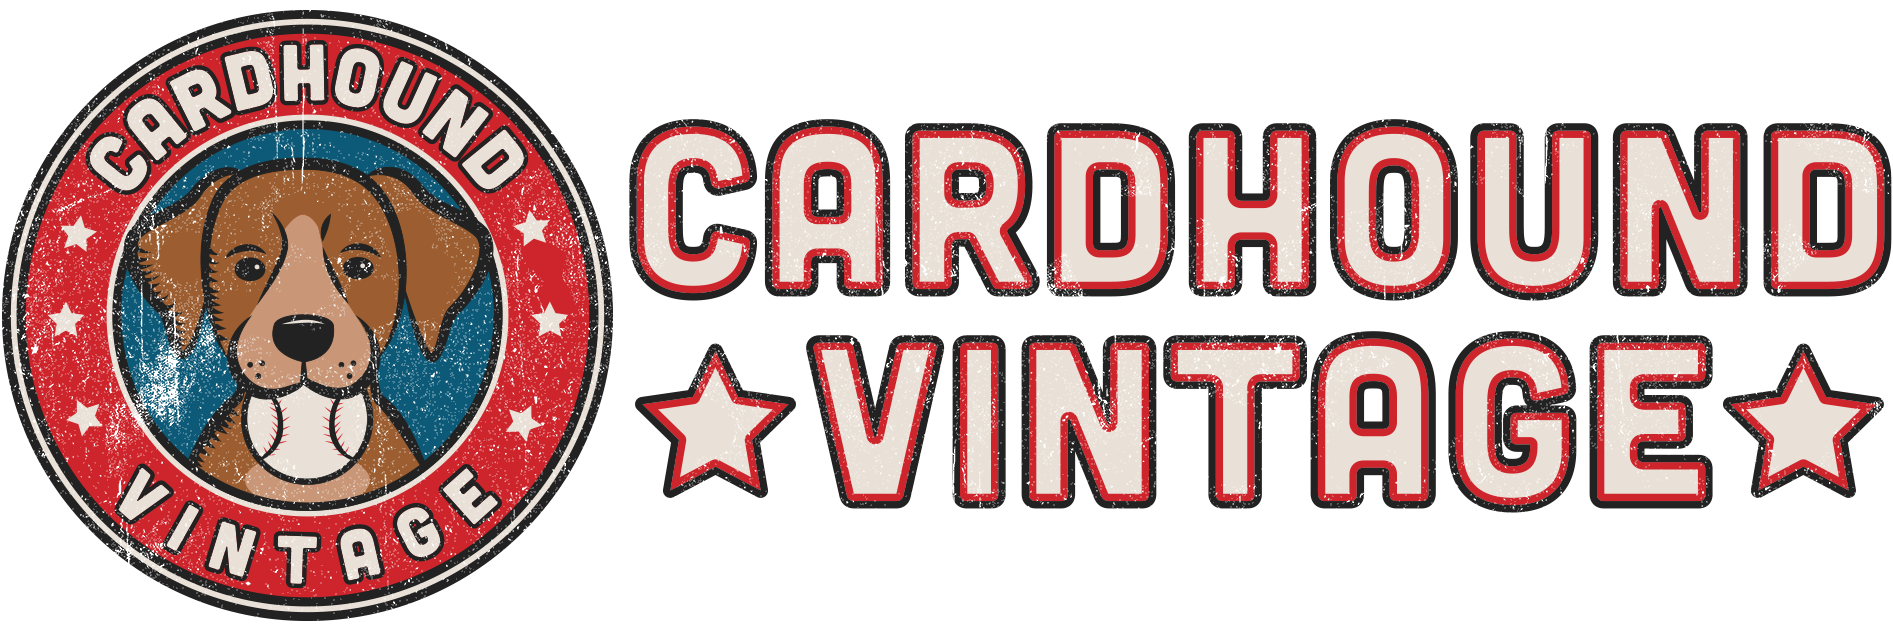 Cardhound Vintage